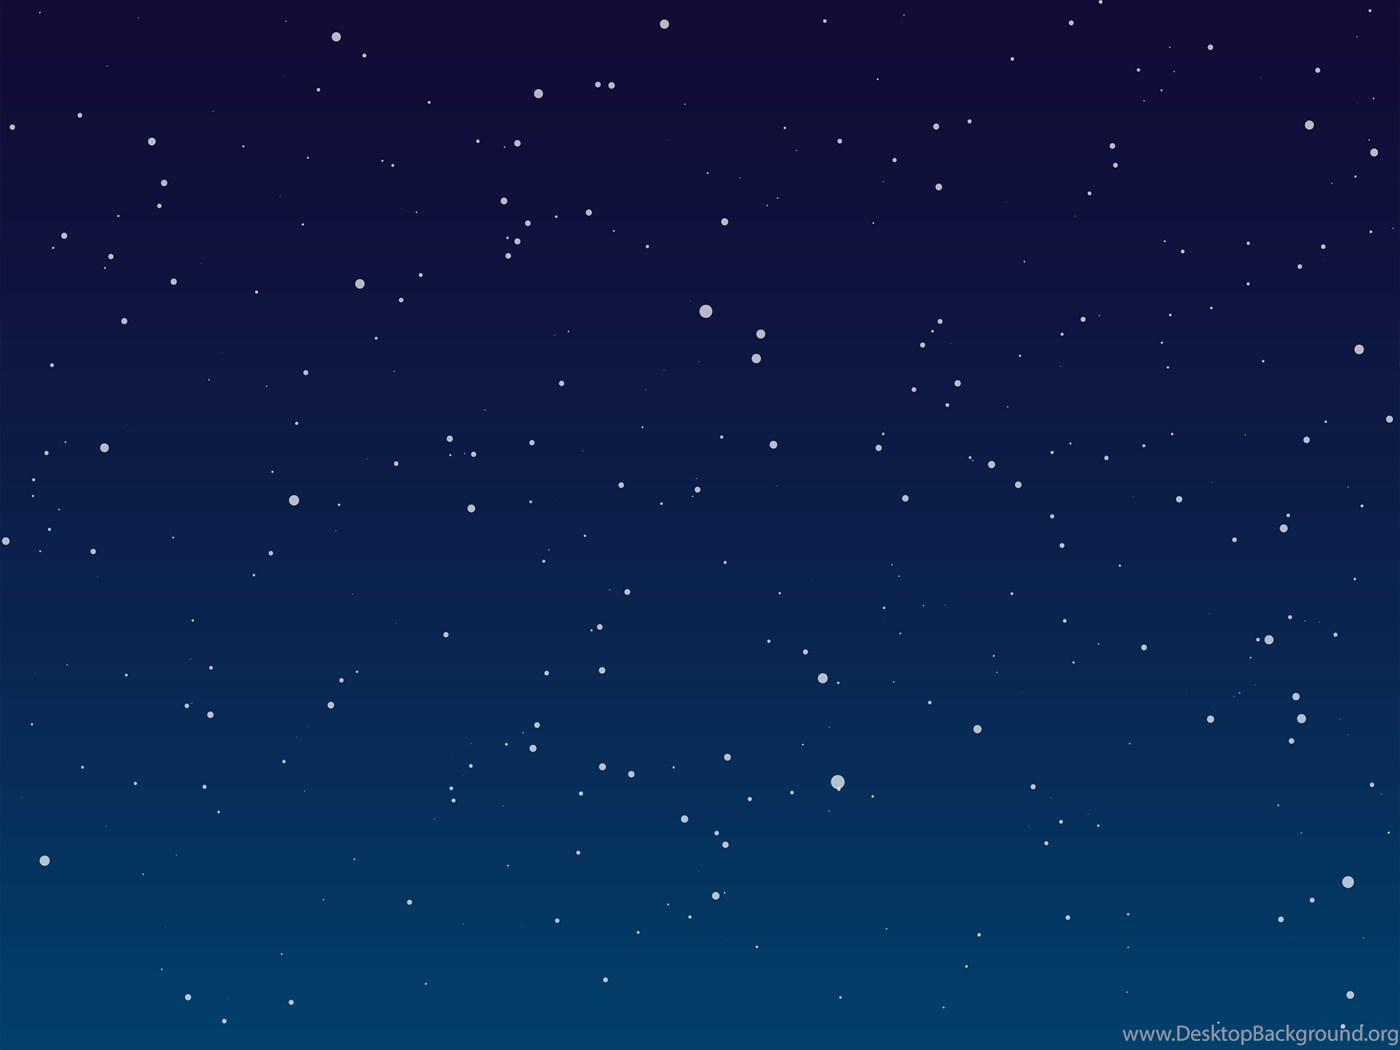 Download Gallery For Clip Art Night Sky Backgrounds Fullscreen Standart 4:3...